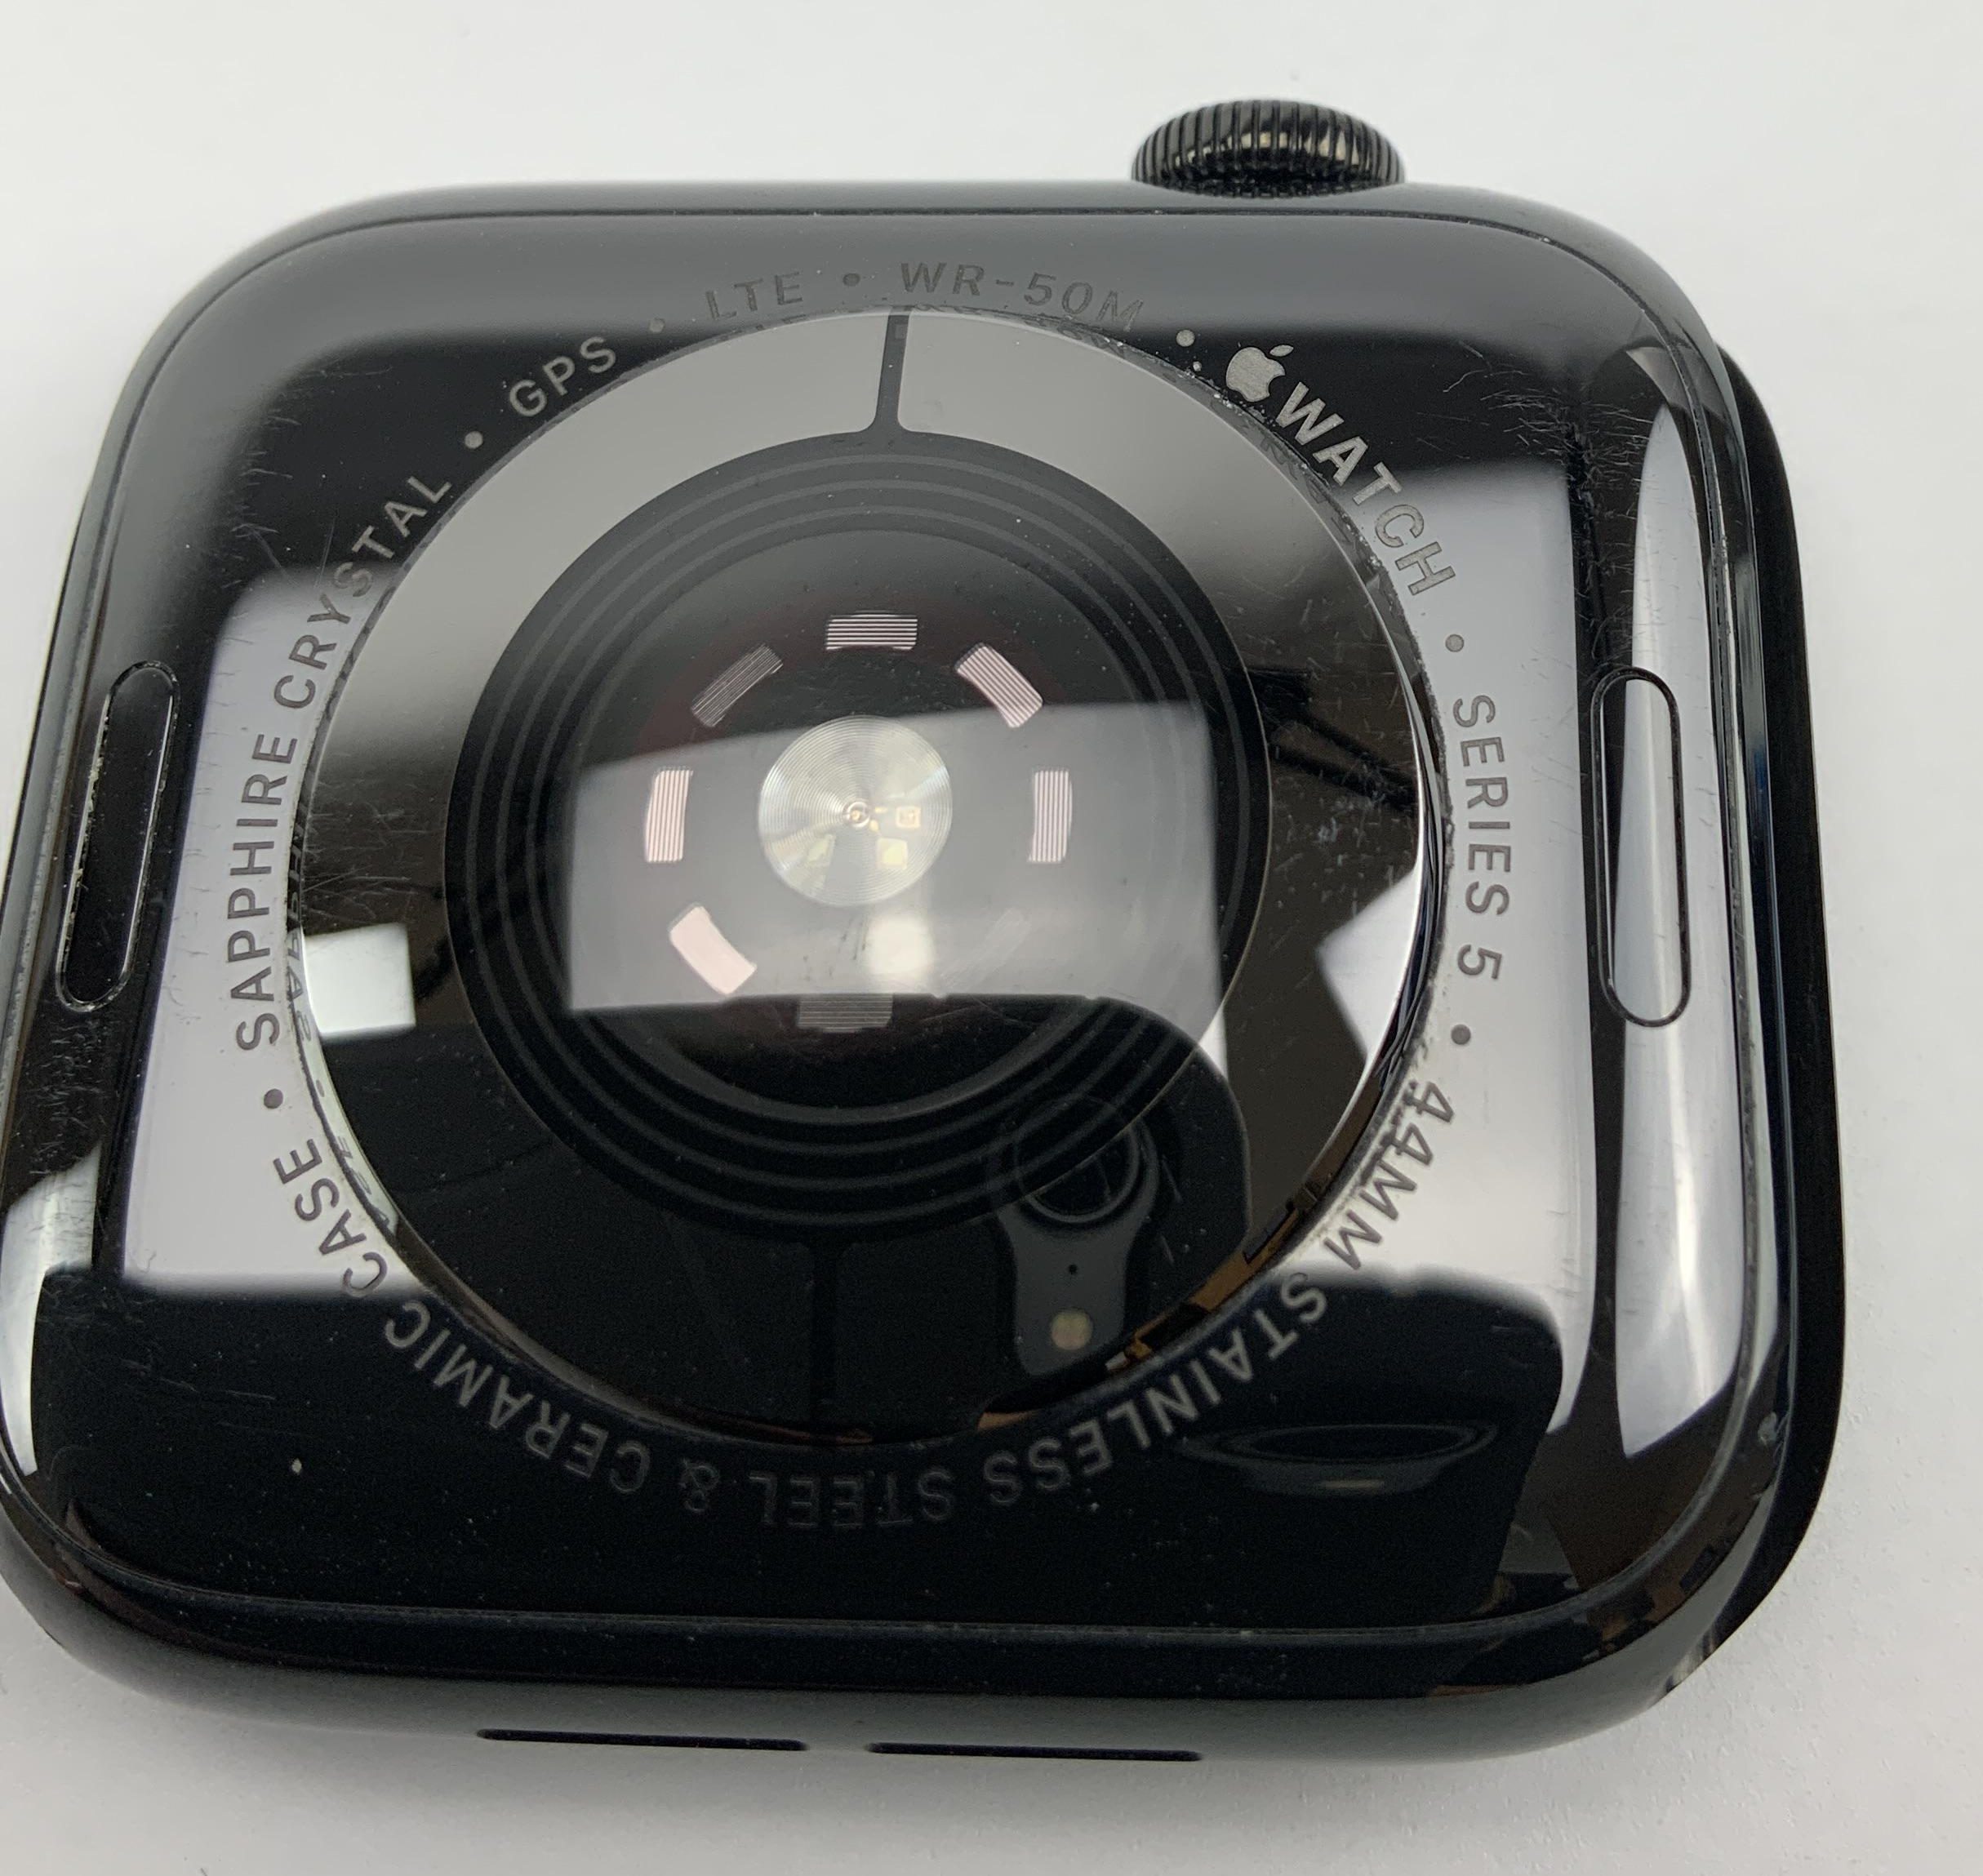 Watch Series 5 Steel Cellular (44mm), Space Black, imagen 4